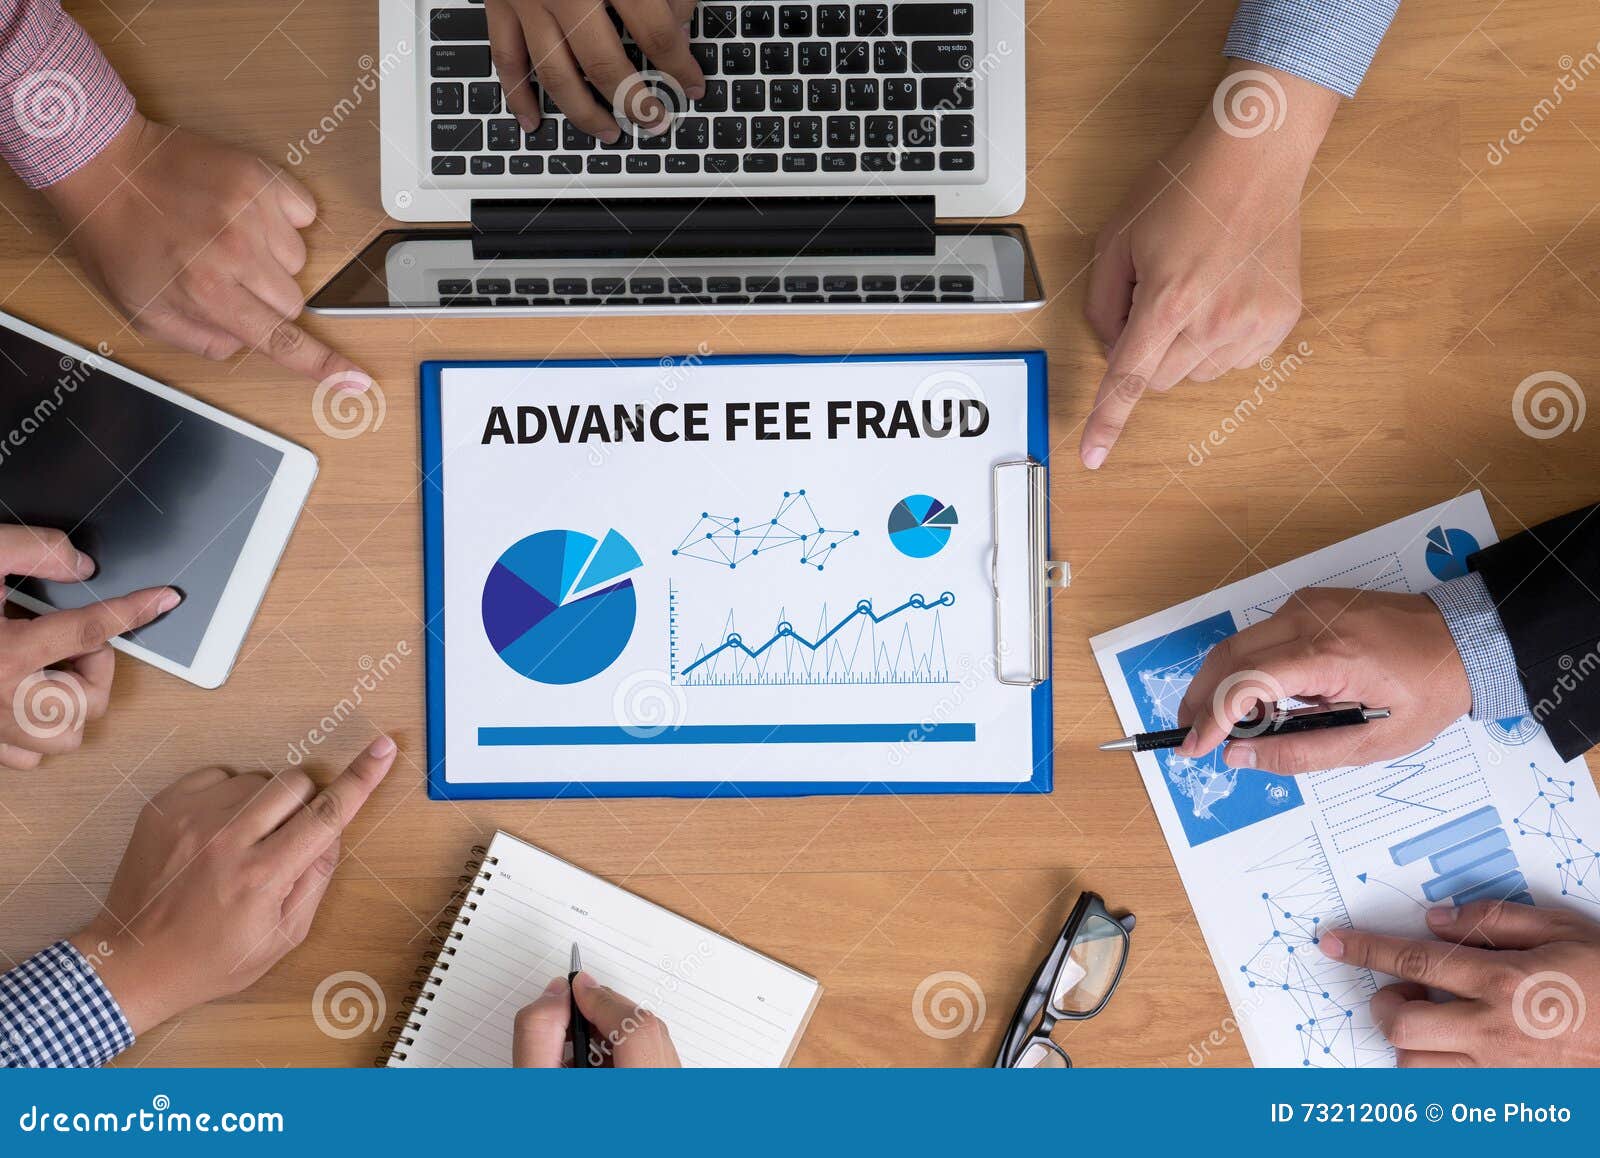 advance-fee fraud